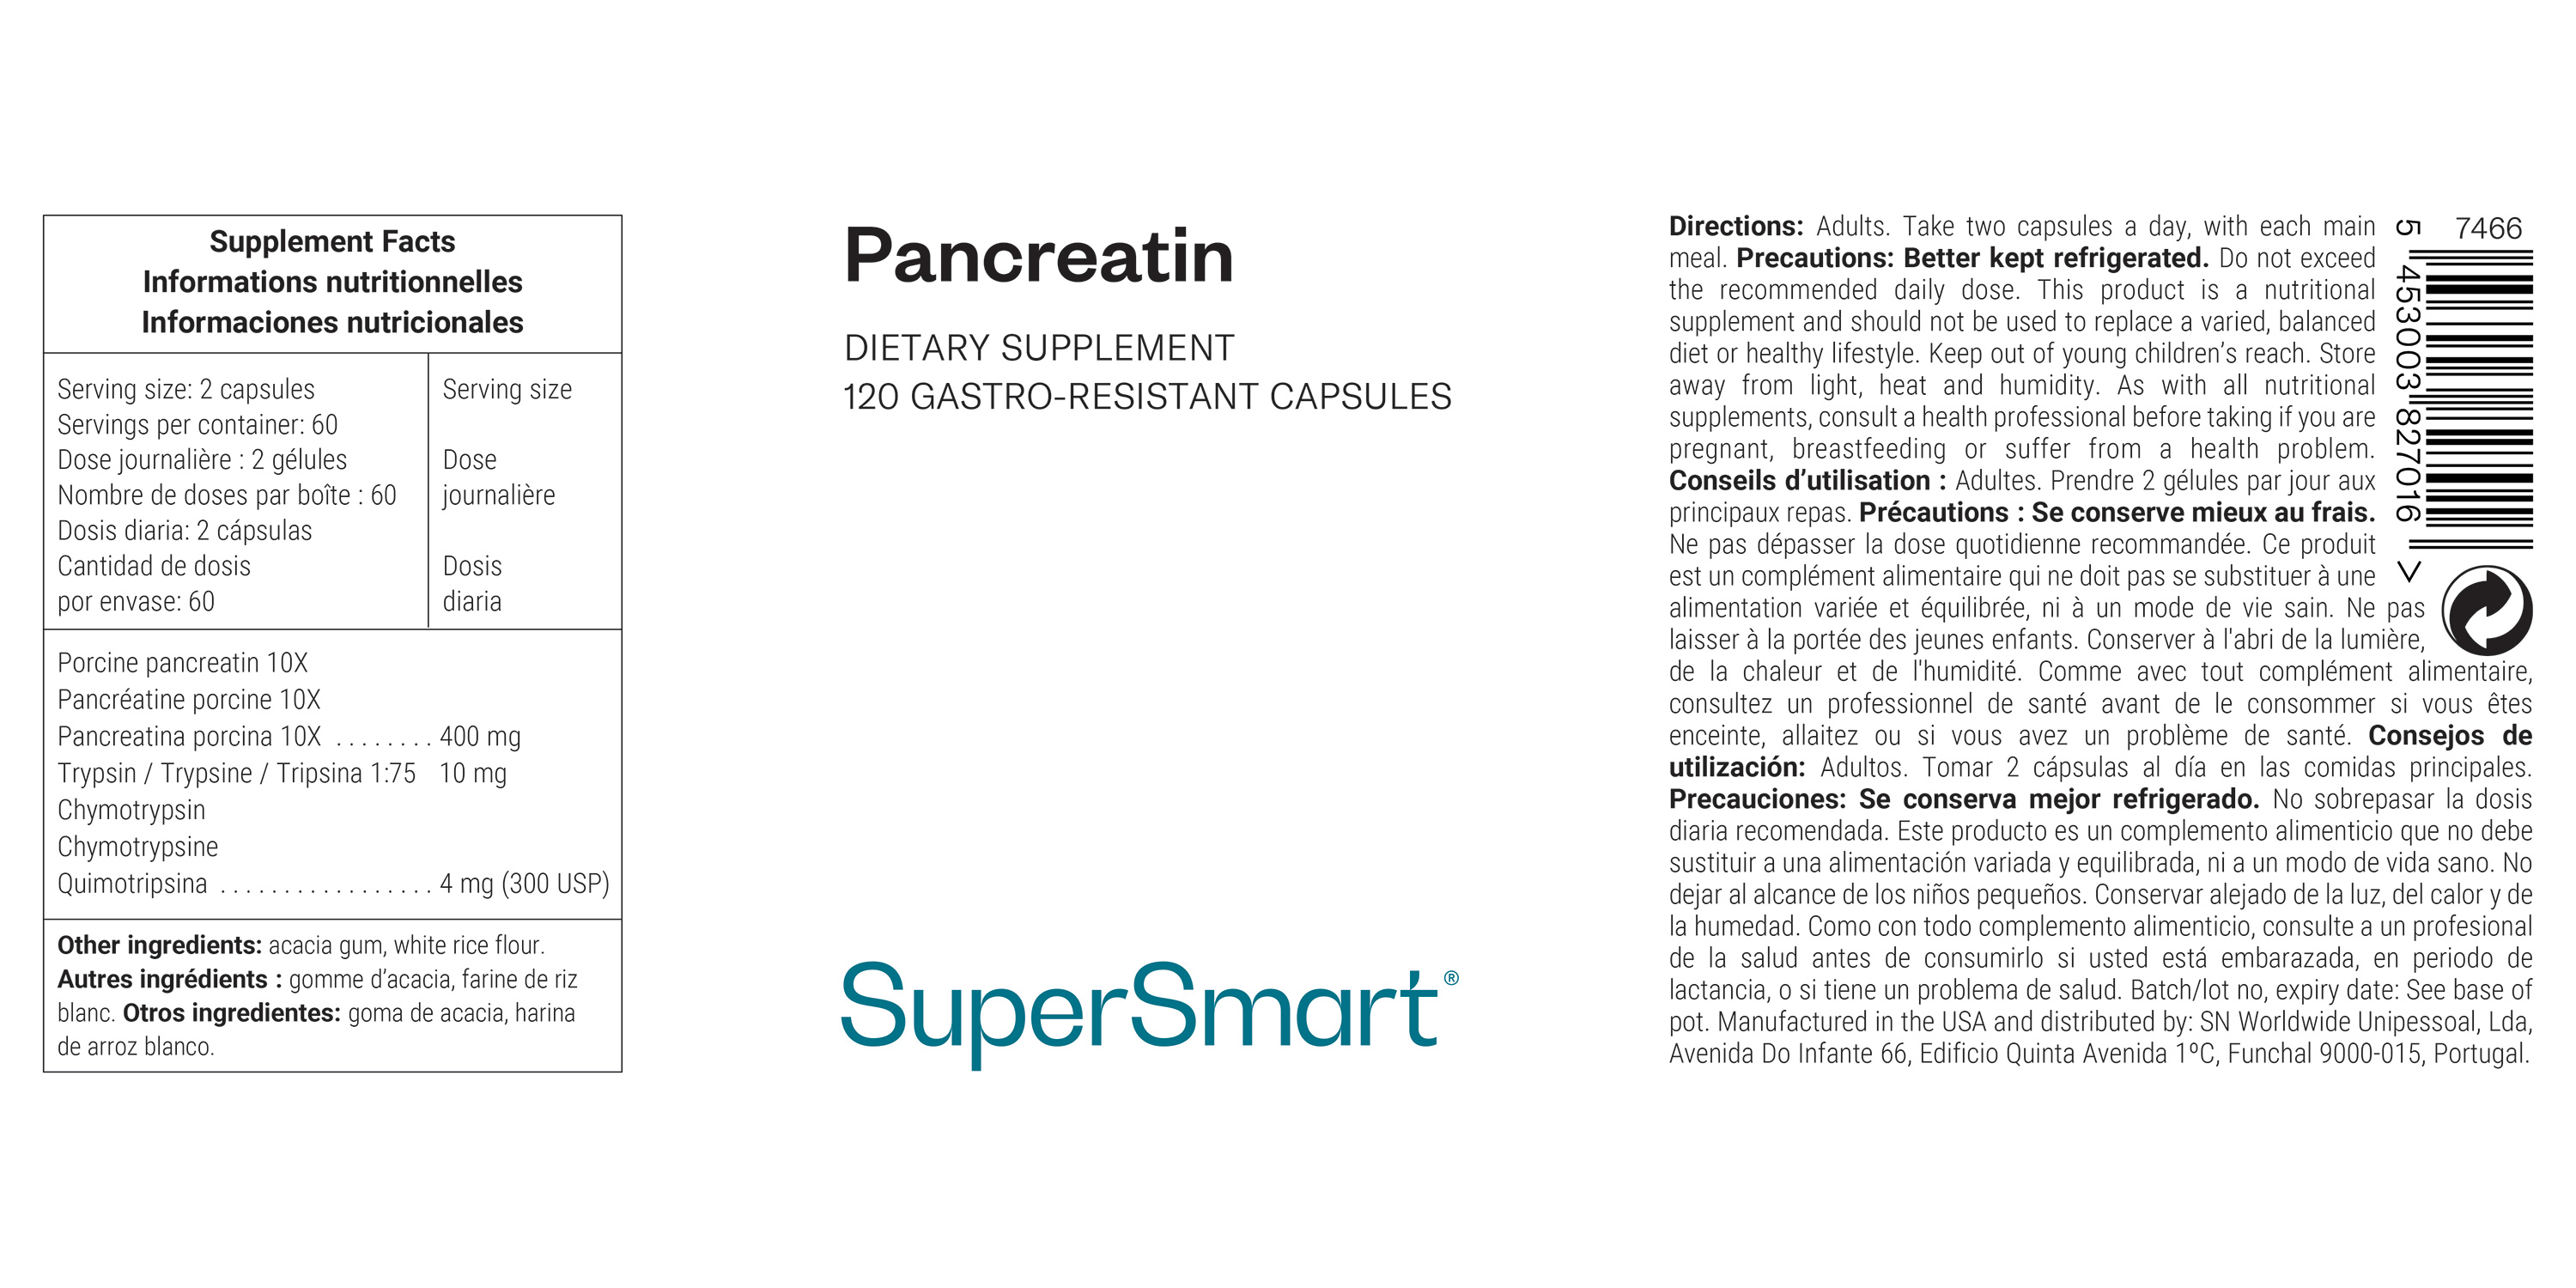 Pancreatin